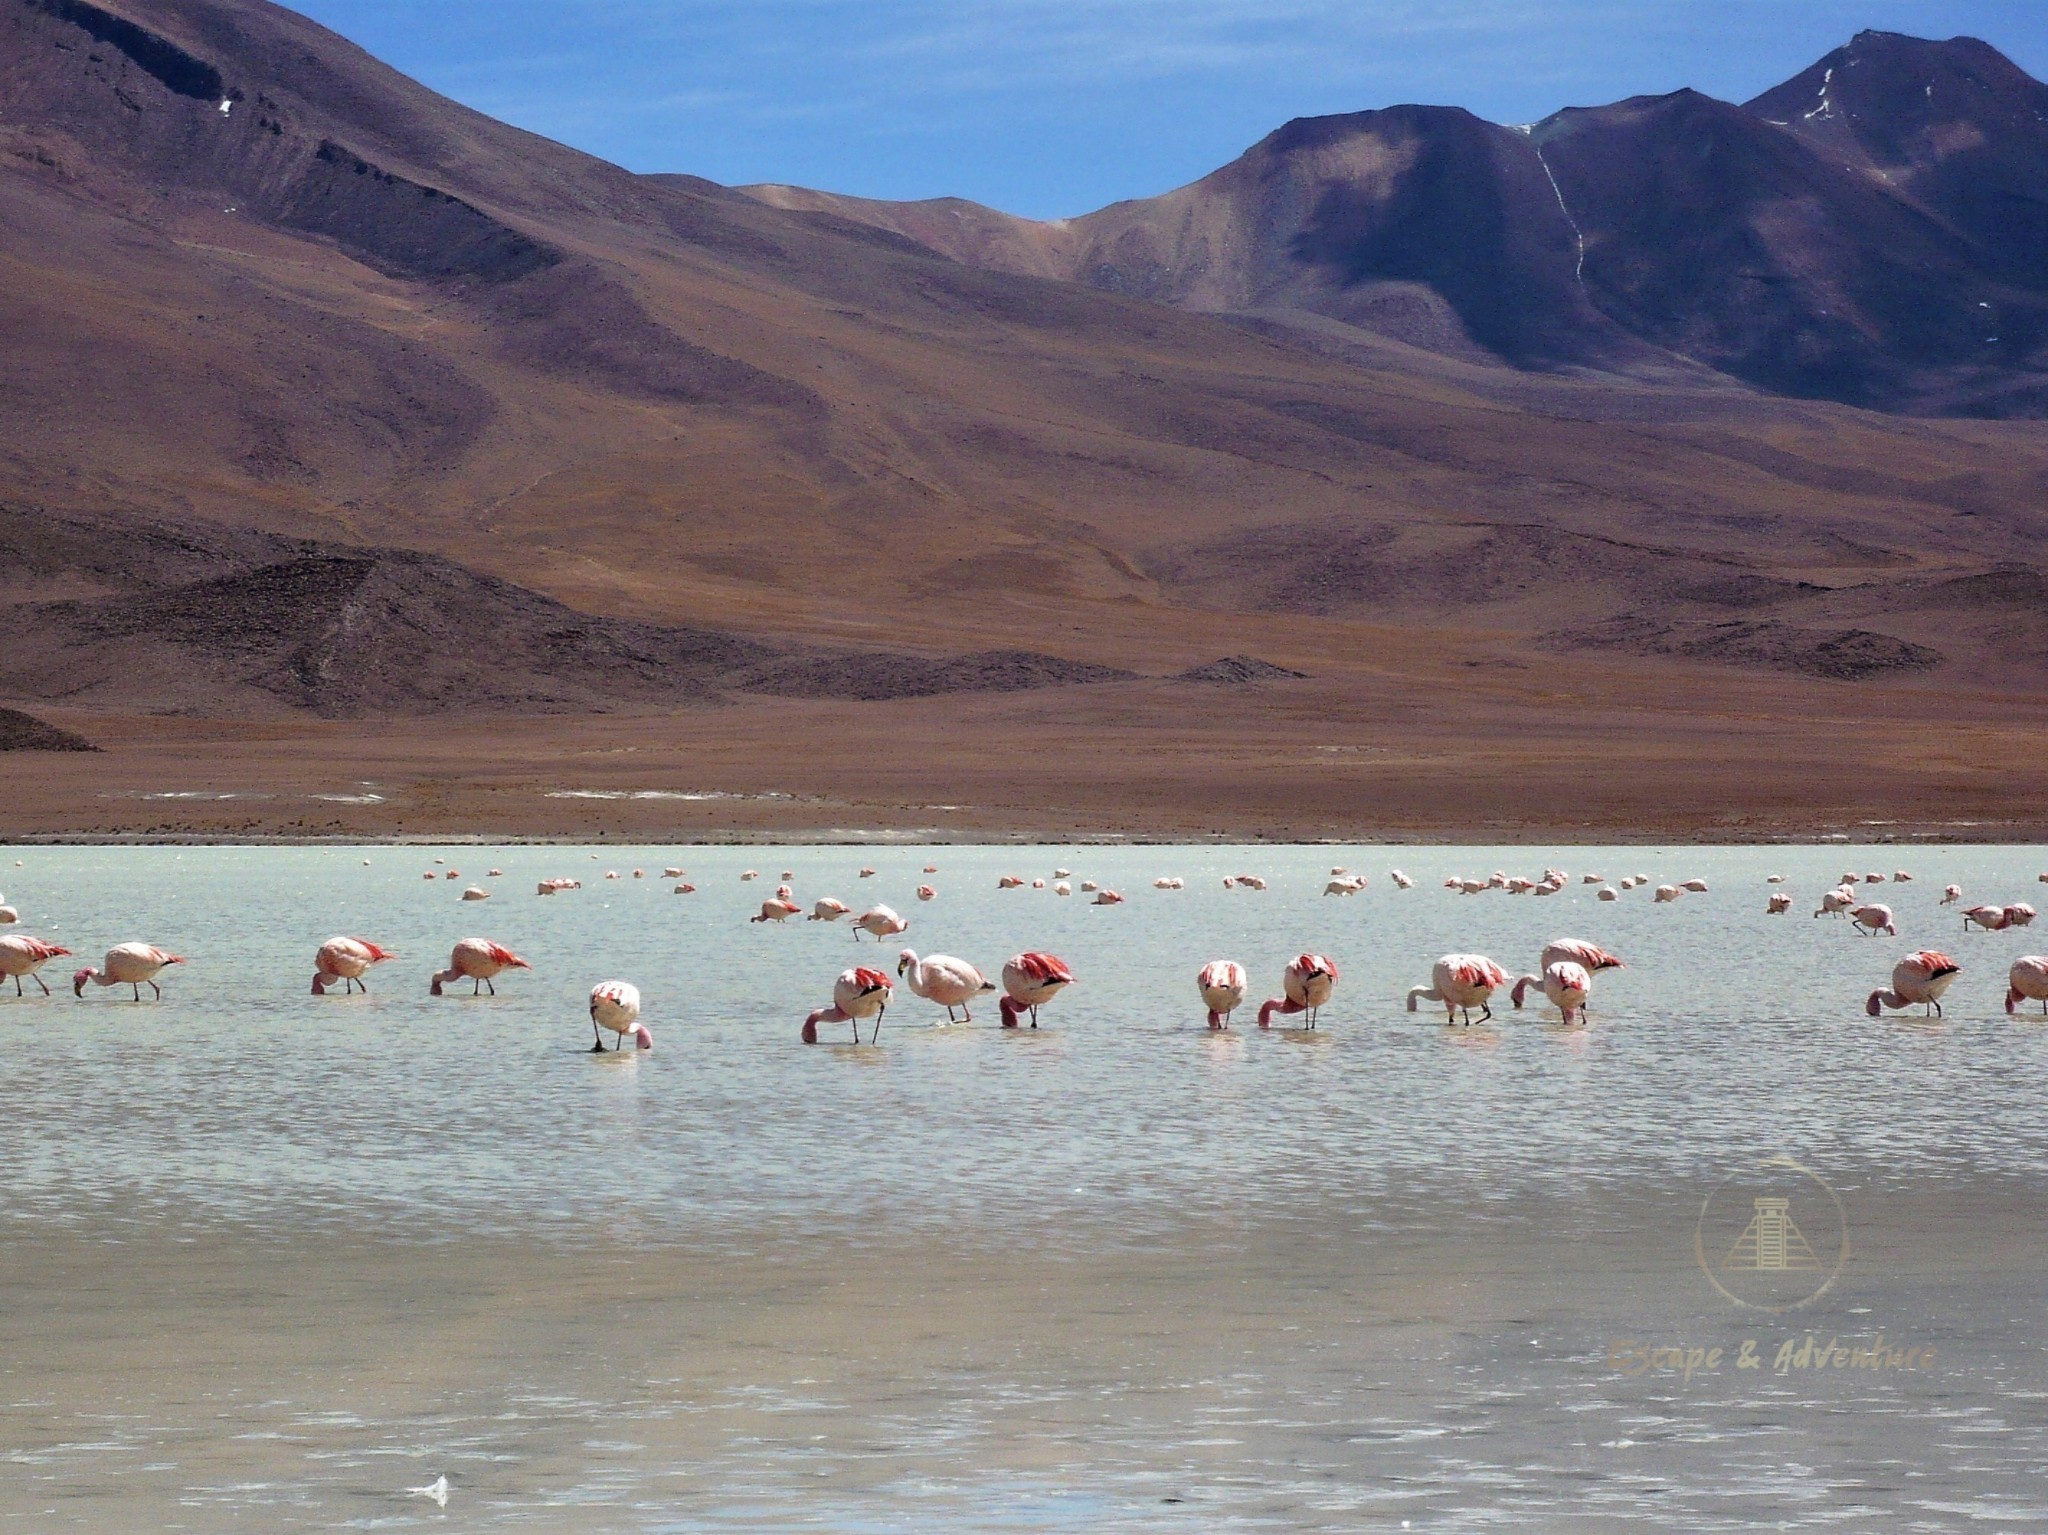 A flock of pink flamingos feeding in a lake on the Bolivian Altiplano representing environmental biodiversity and natural habitats.